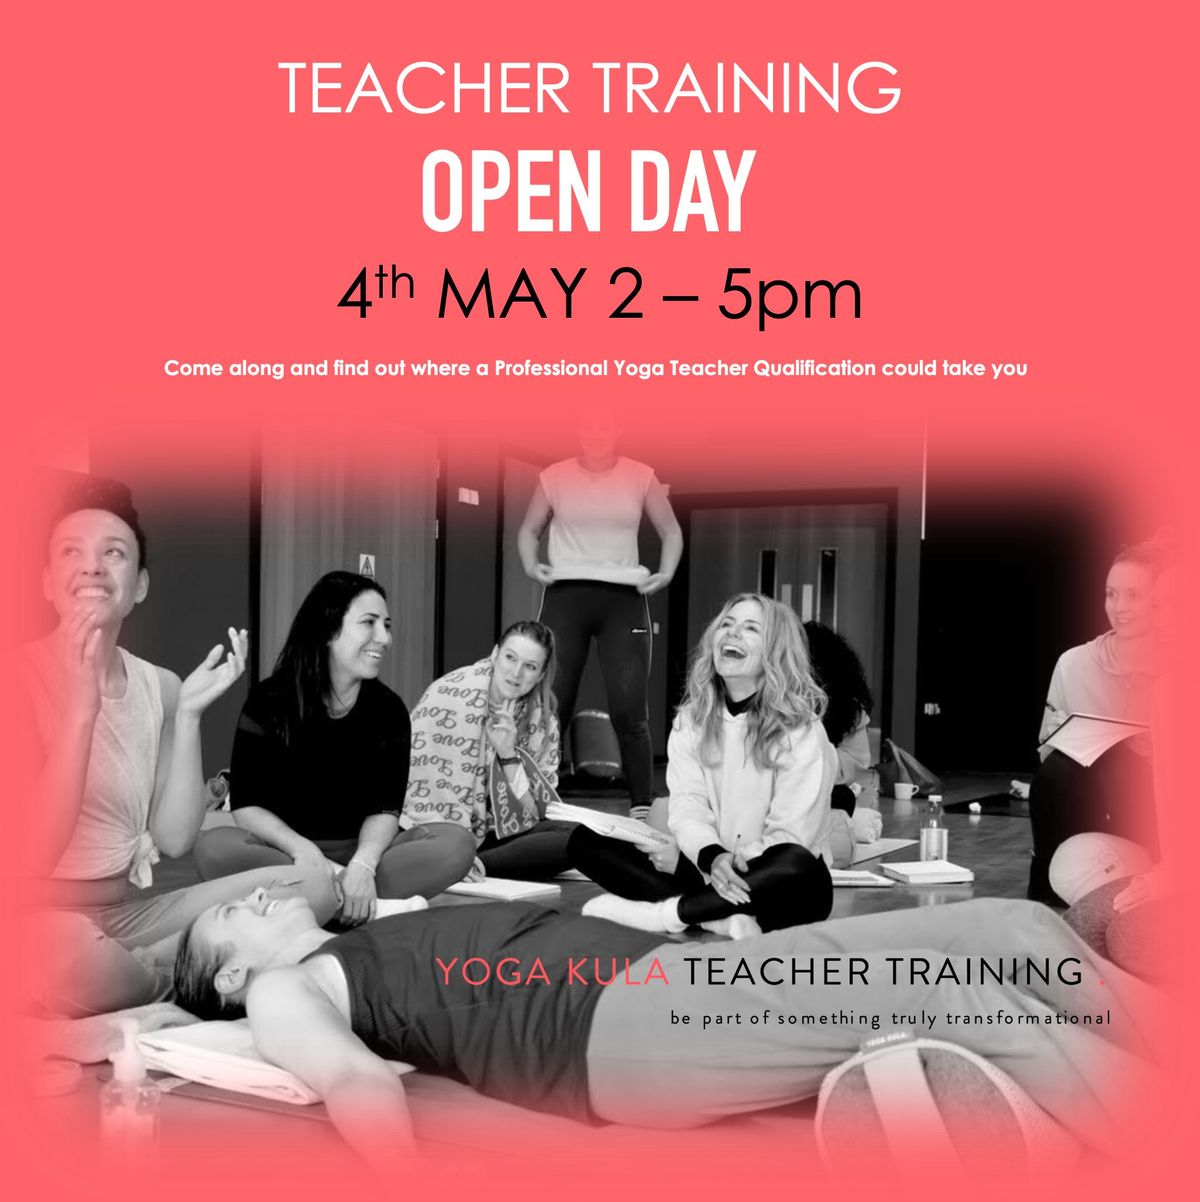 Yoga Kula Teacher Training Course Open Day